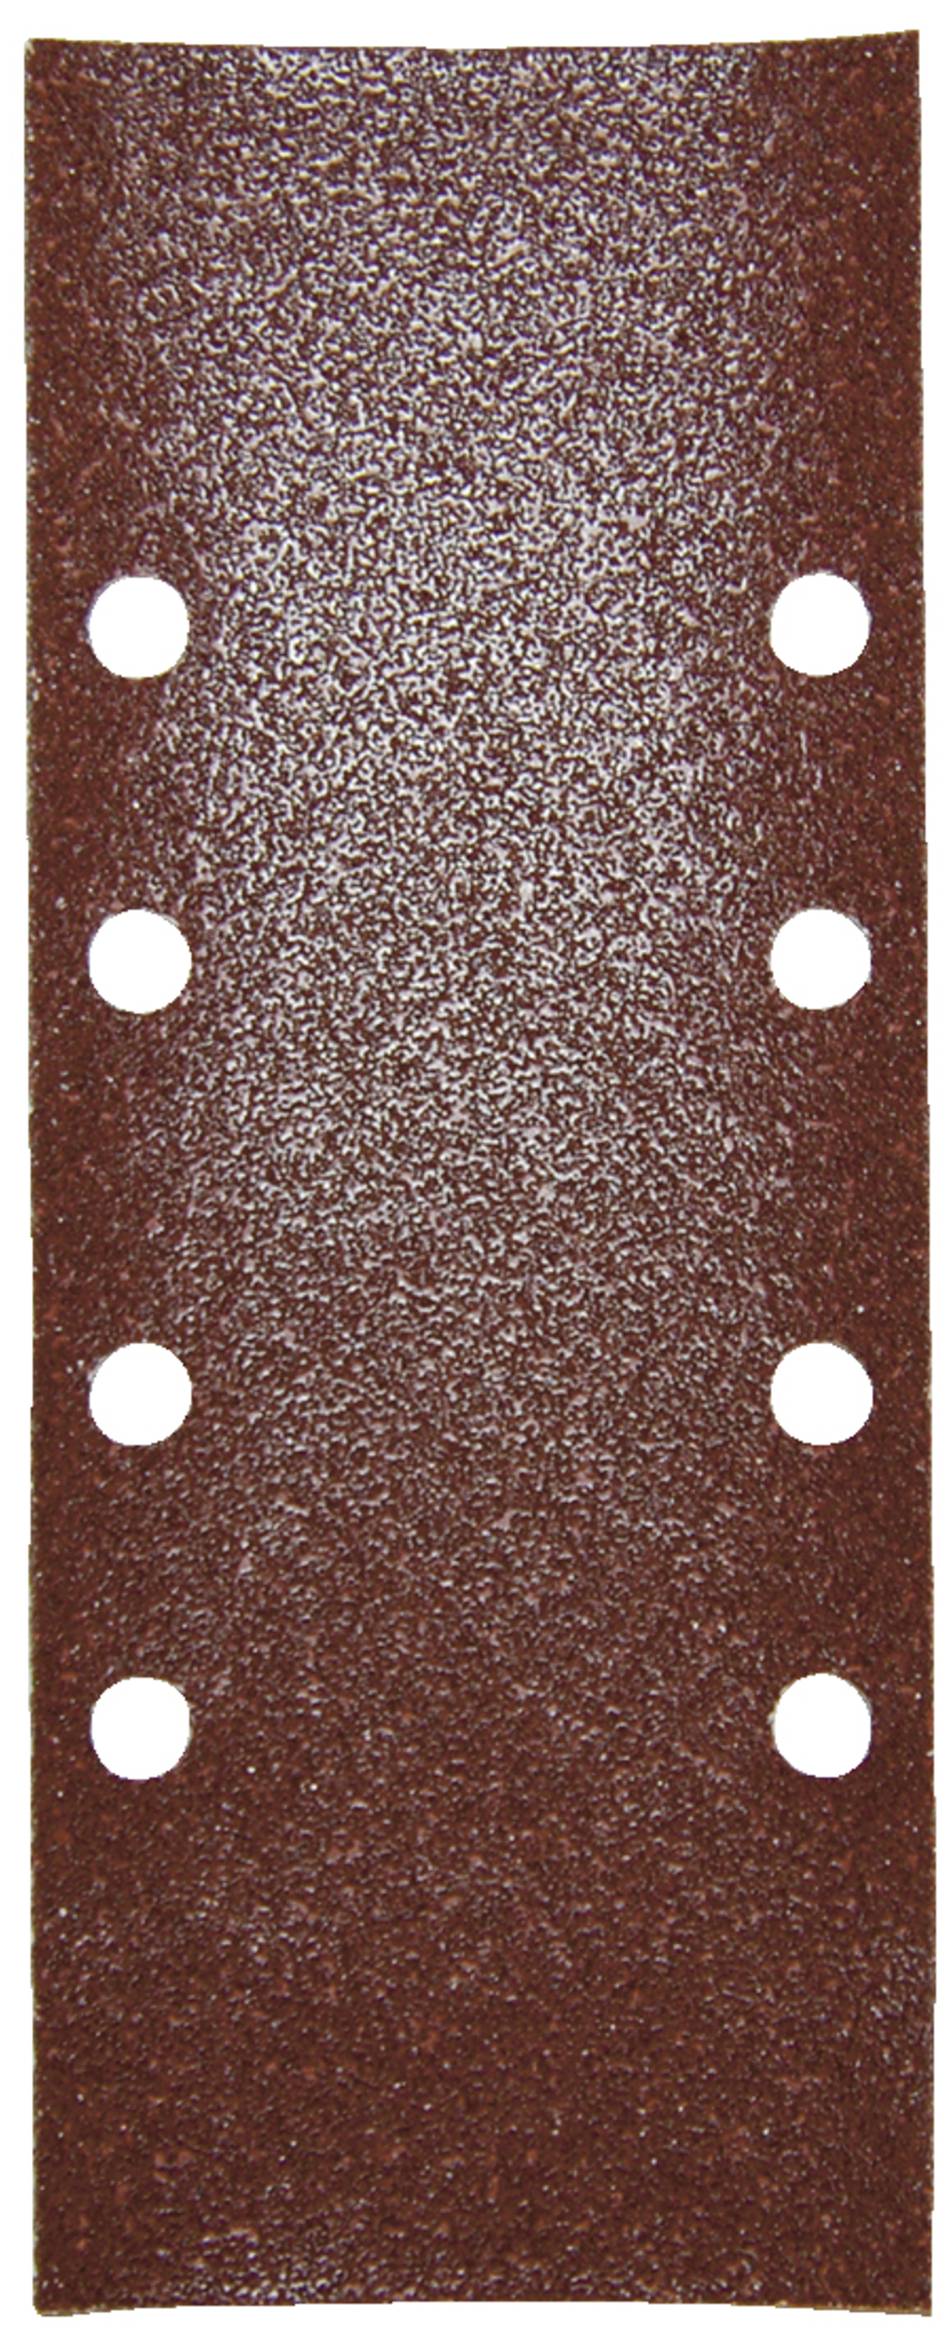 MAKITA - Schleifpapier - für Holz, Metall - 10 Stücke - rechteckig - Körnung: P180 - 93 mm x 230 mm